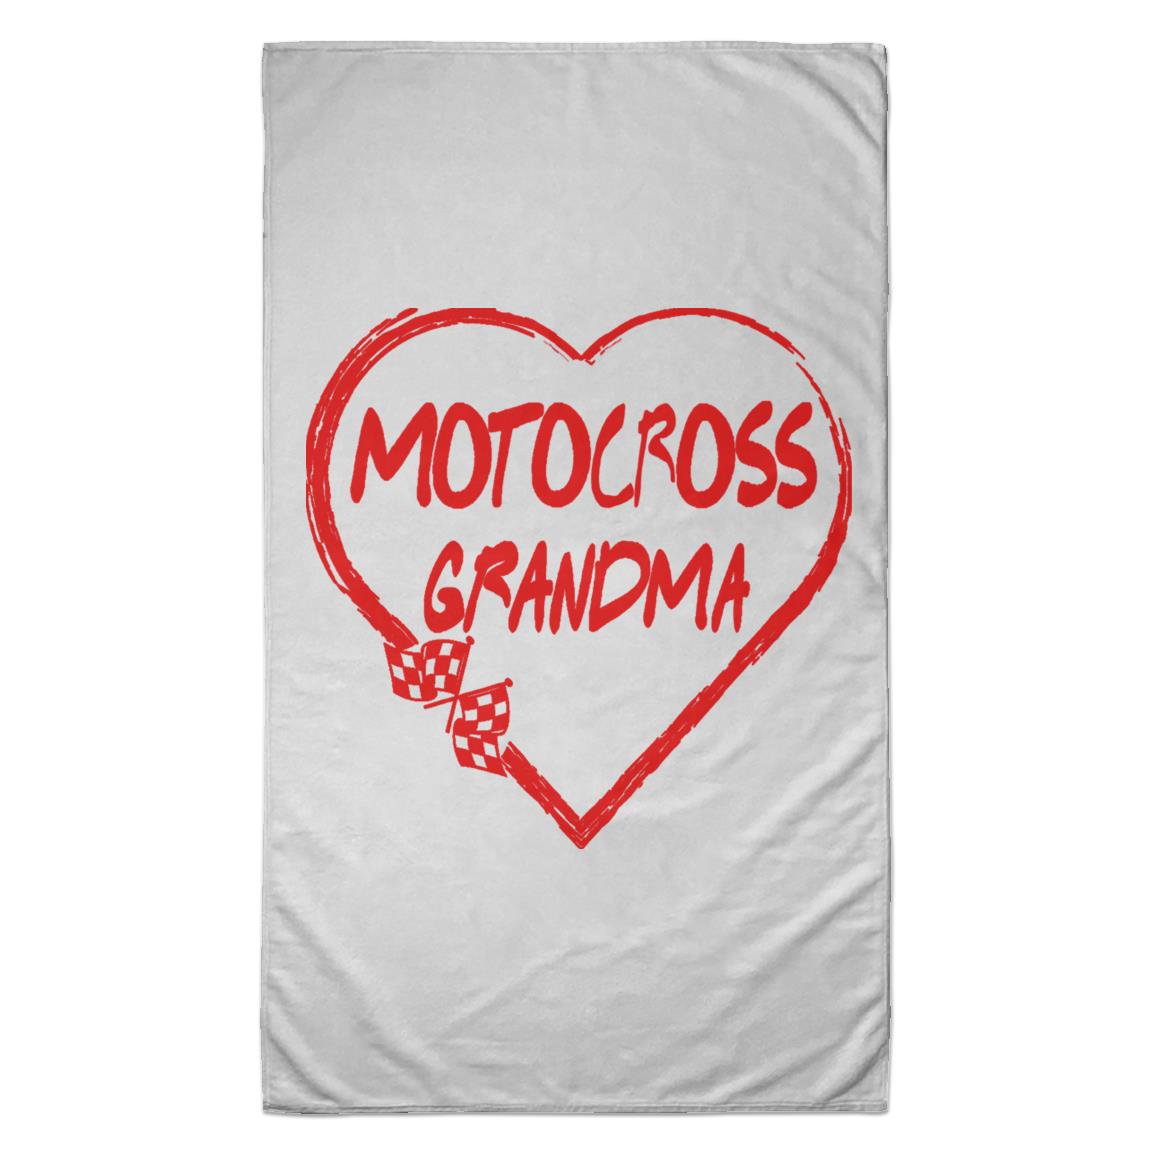 Motocross Grandma Heart Towel - 35x60